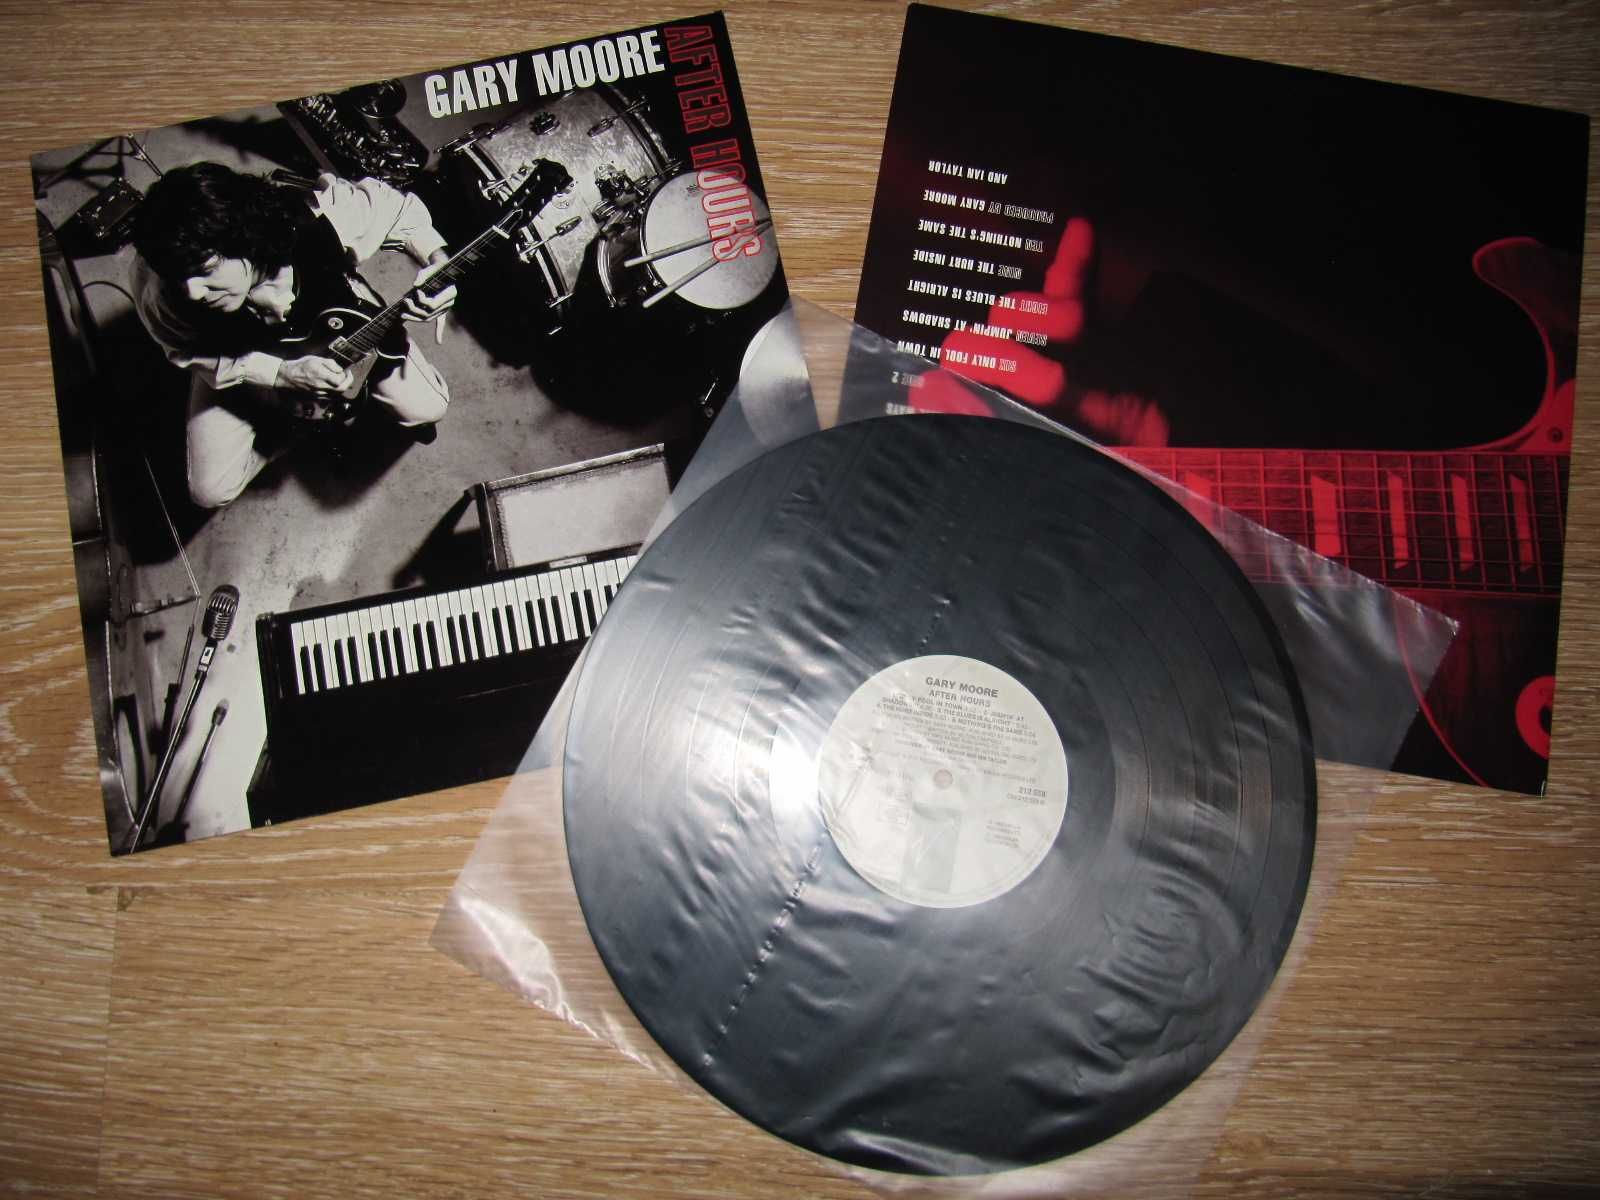 Виниловый Альбом GARY MOORE -After Hours- 1992 *Оригинал (NM/NM)